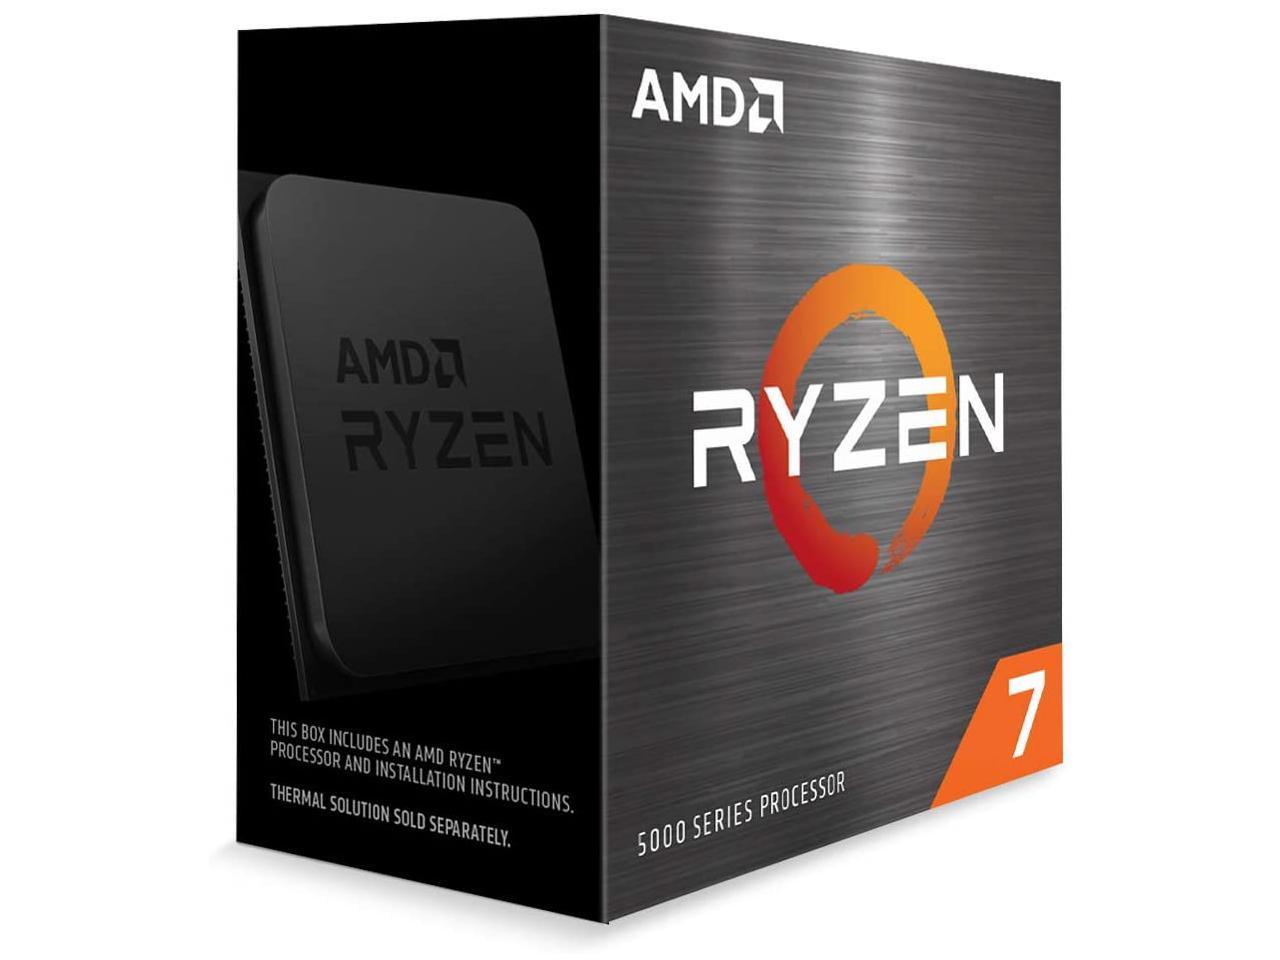 AMD Ryzen 7 5800X 3.8Ghz 8-Core AM4 Processor at Newegg $389